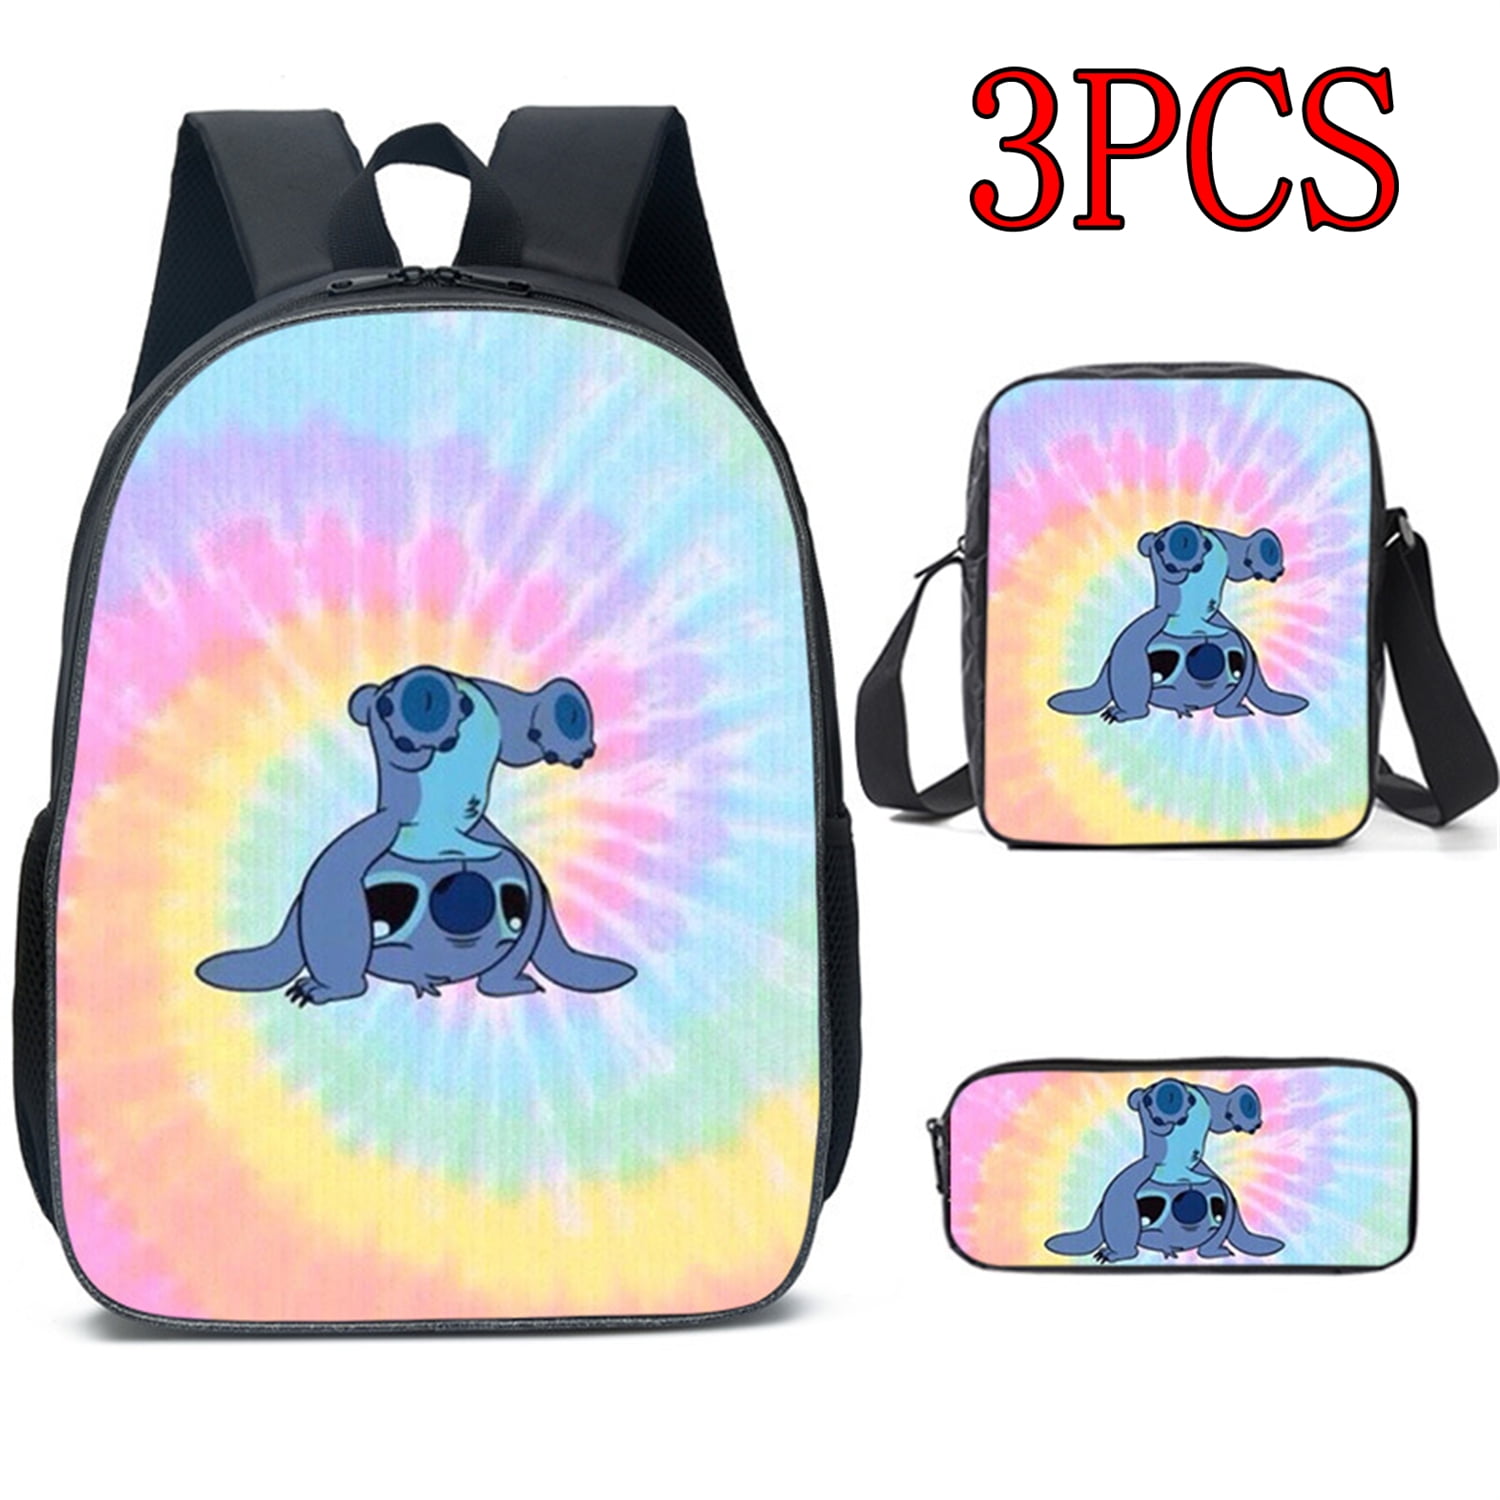 Disney Stitch Backpack Transparent Clear 16 Girls School Bag Pink Blue